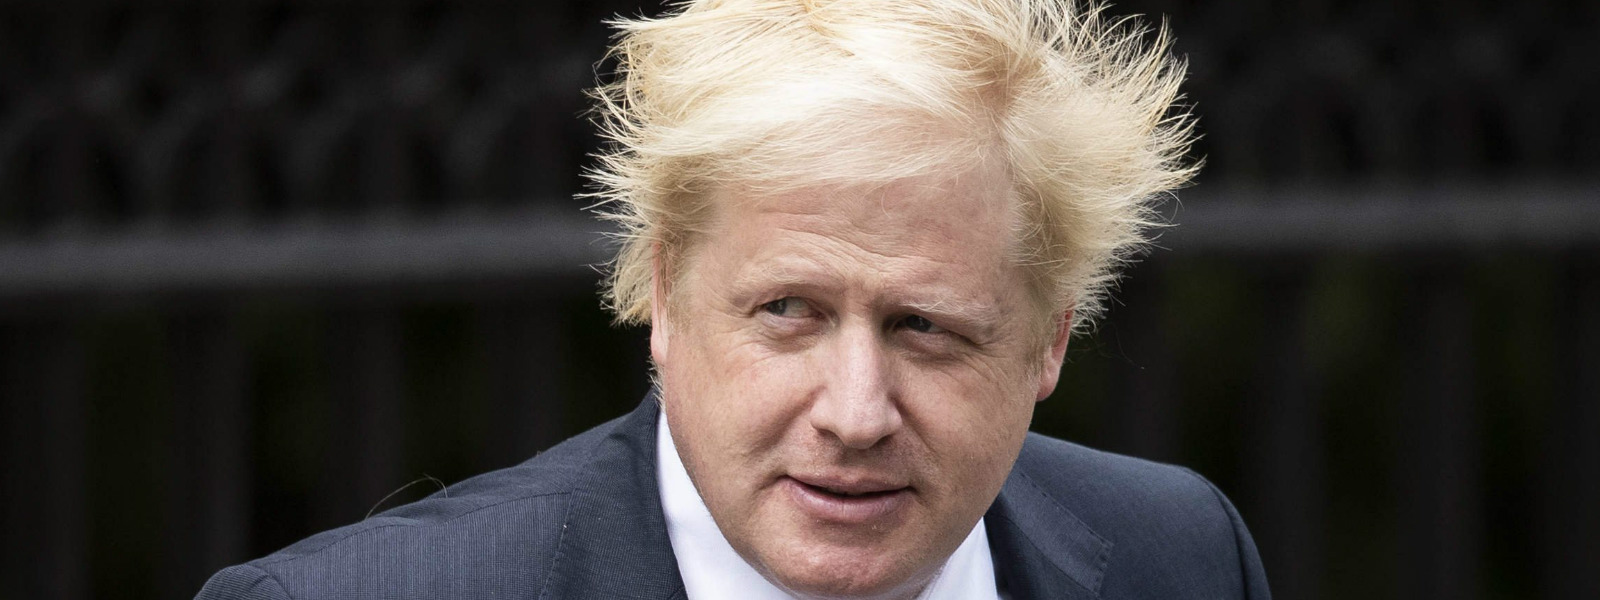 UK PM Johnson to attend Queen’s speech